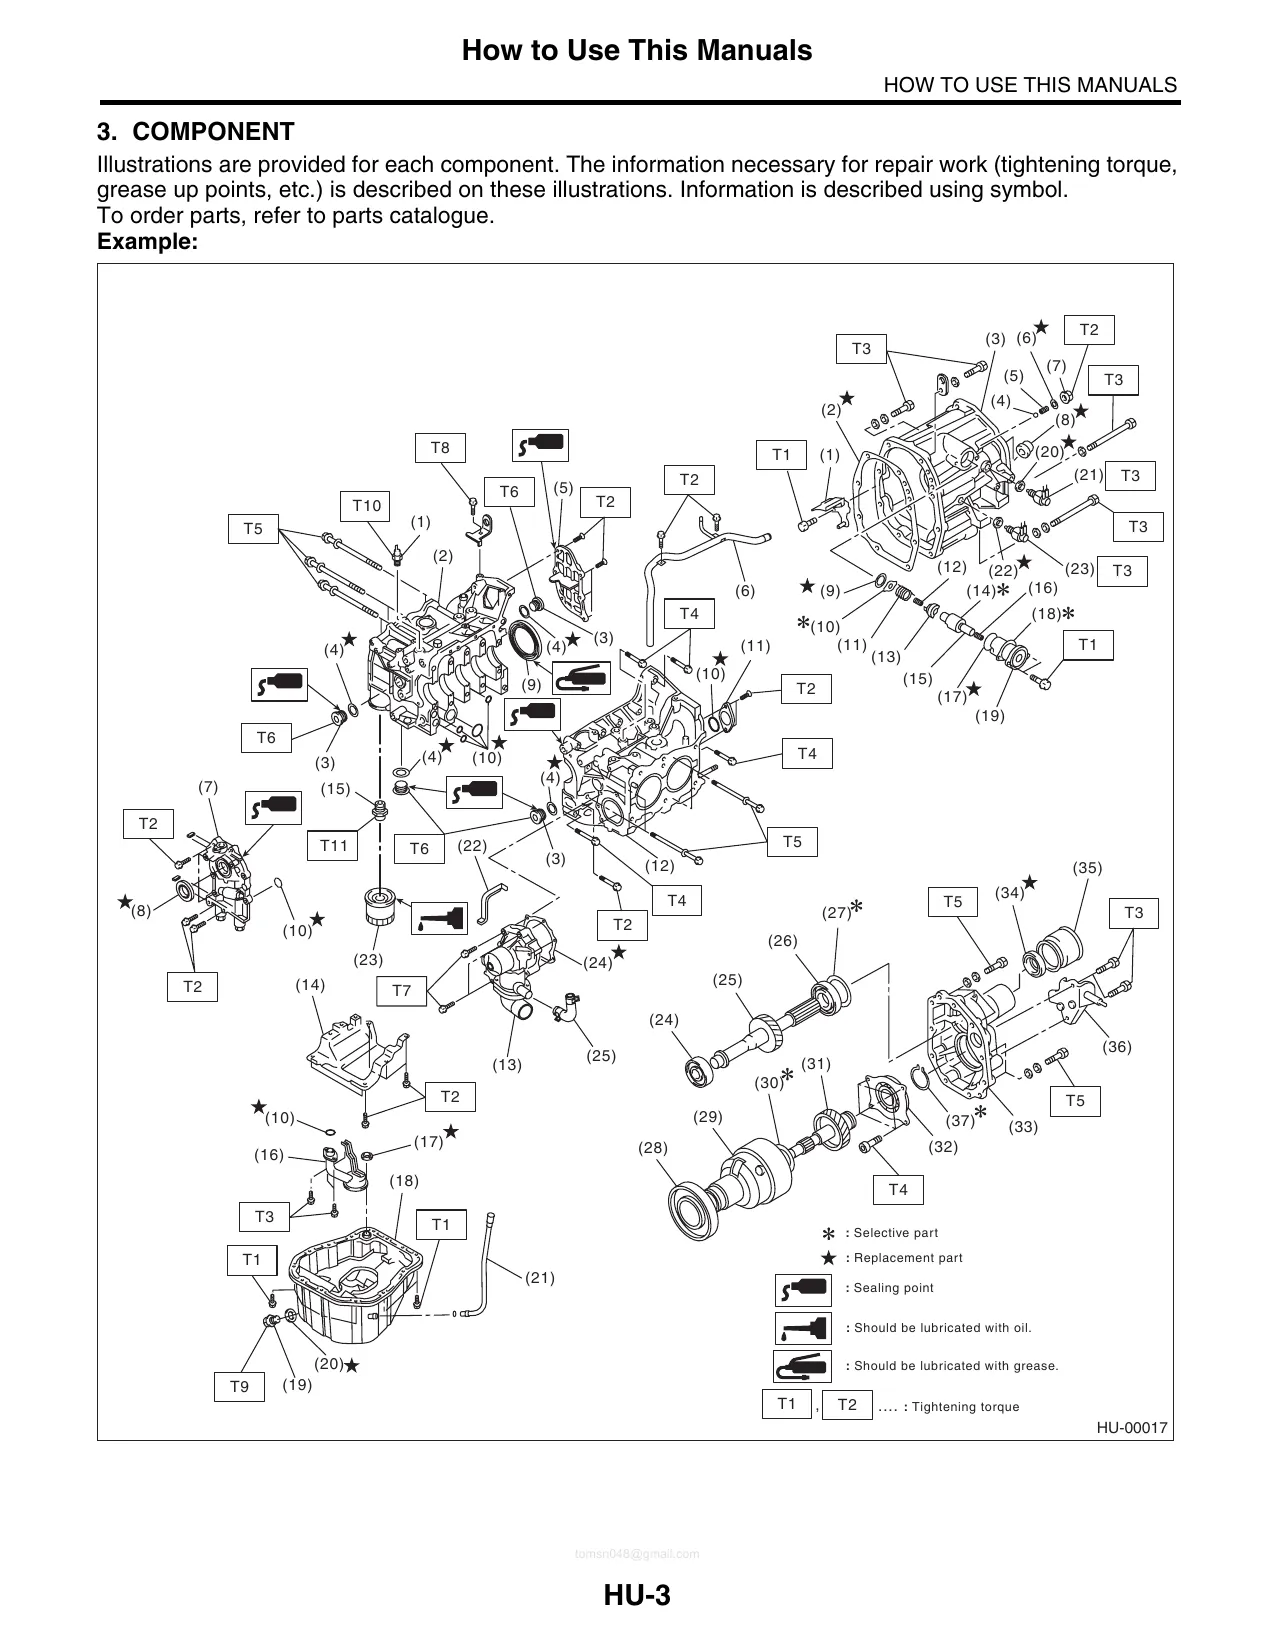 2008-2009 Subaru Legacy repair manual